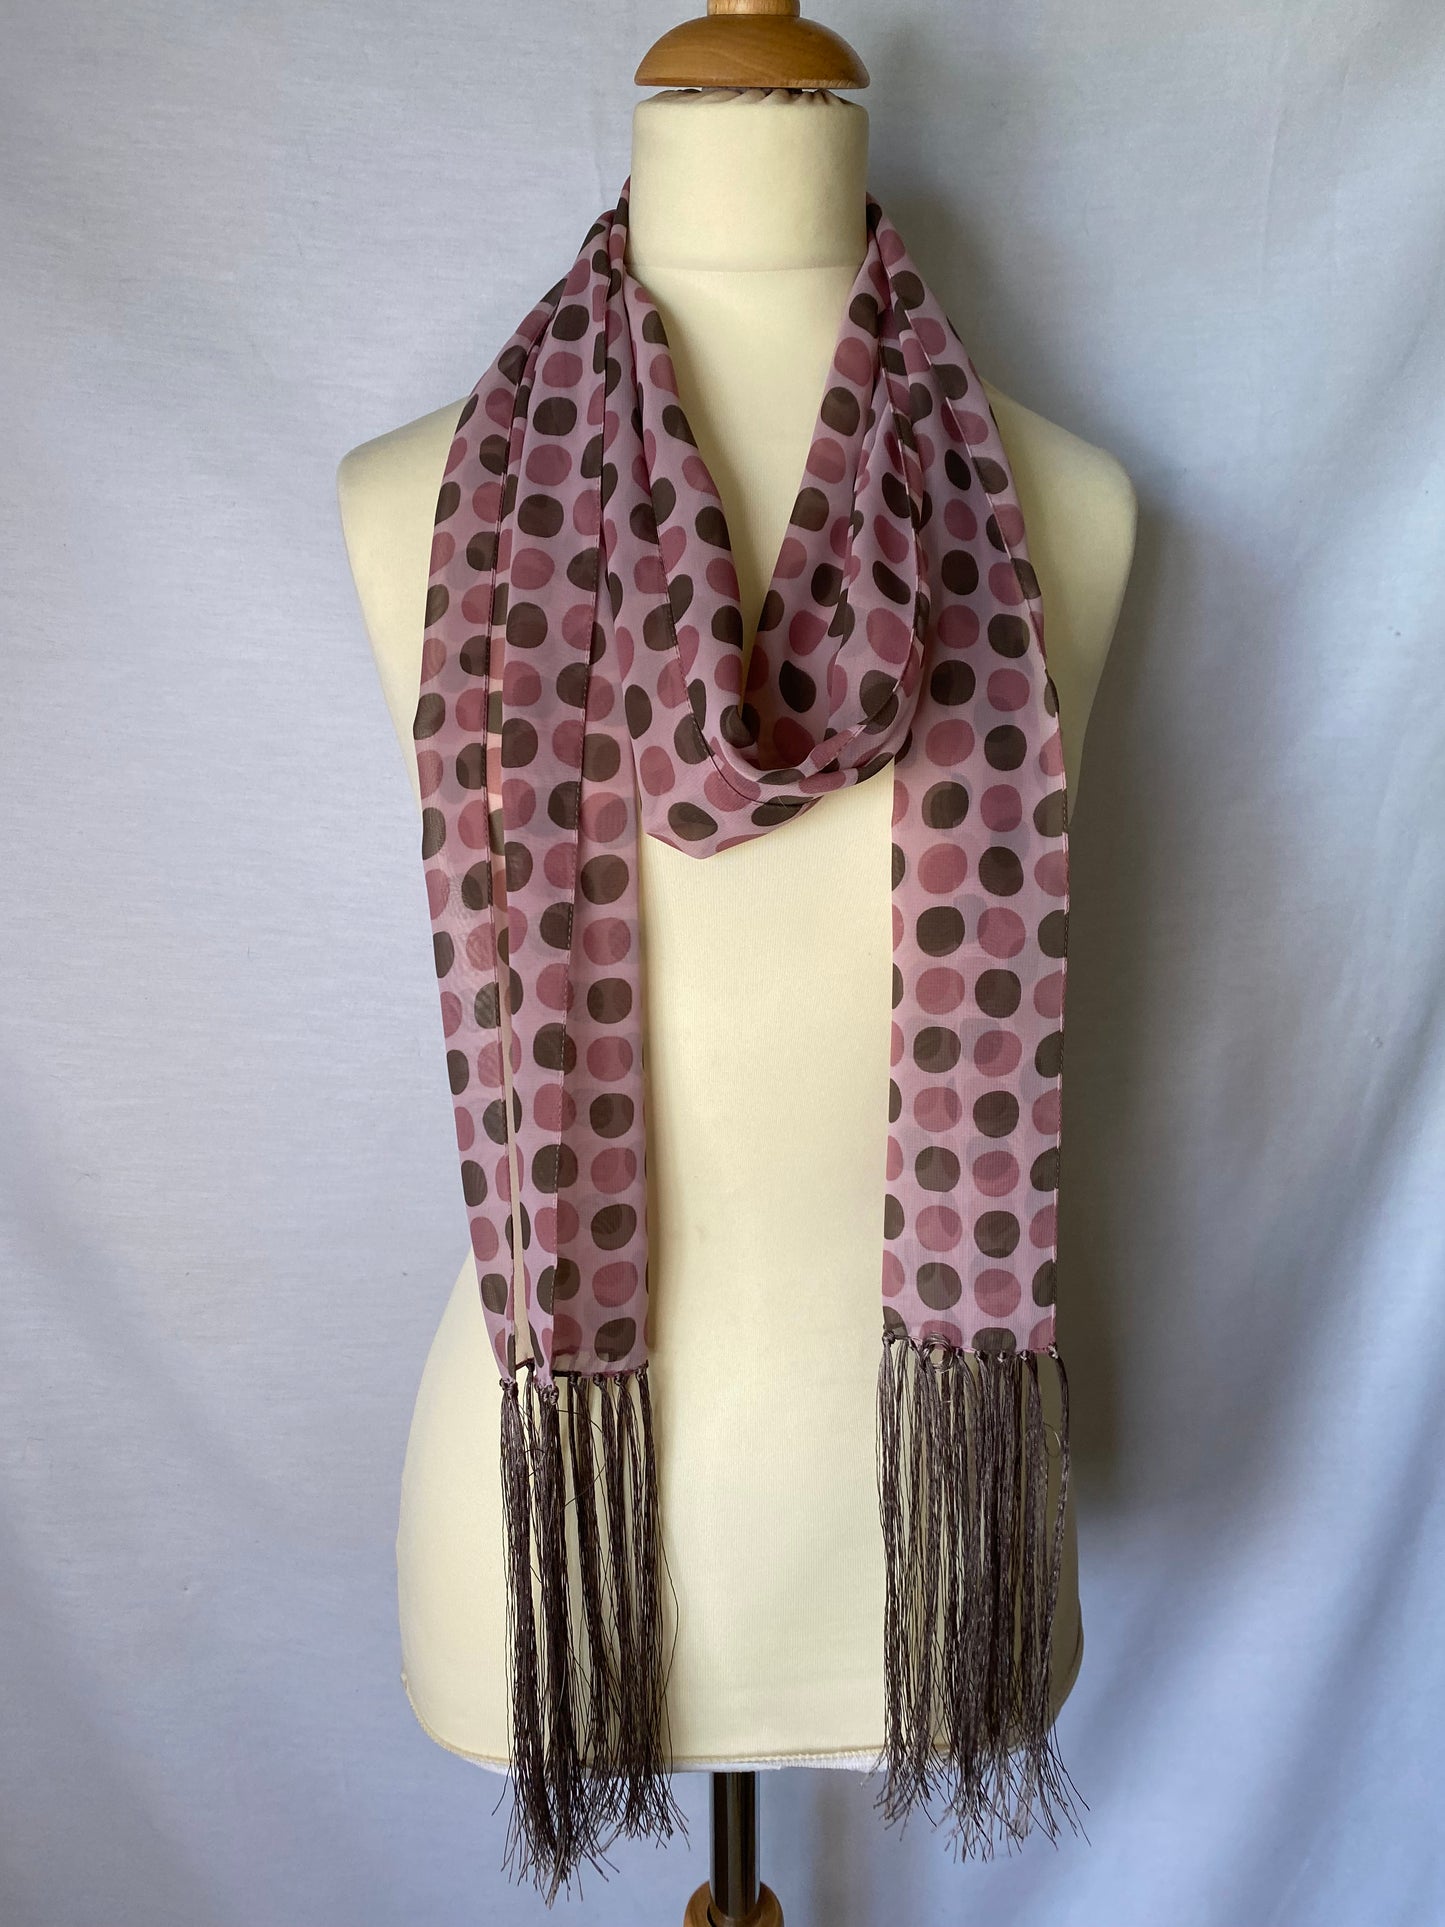 Unbranded - pink polka dot long sheer tassel scarf